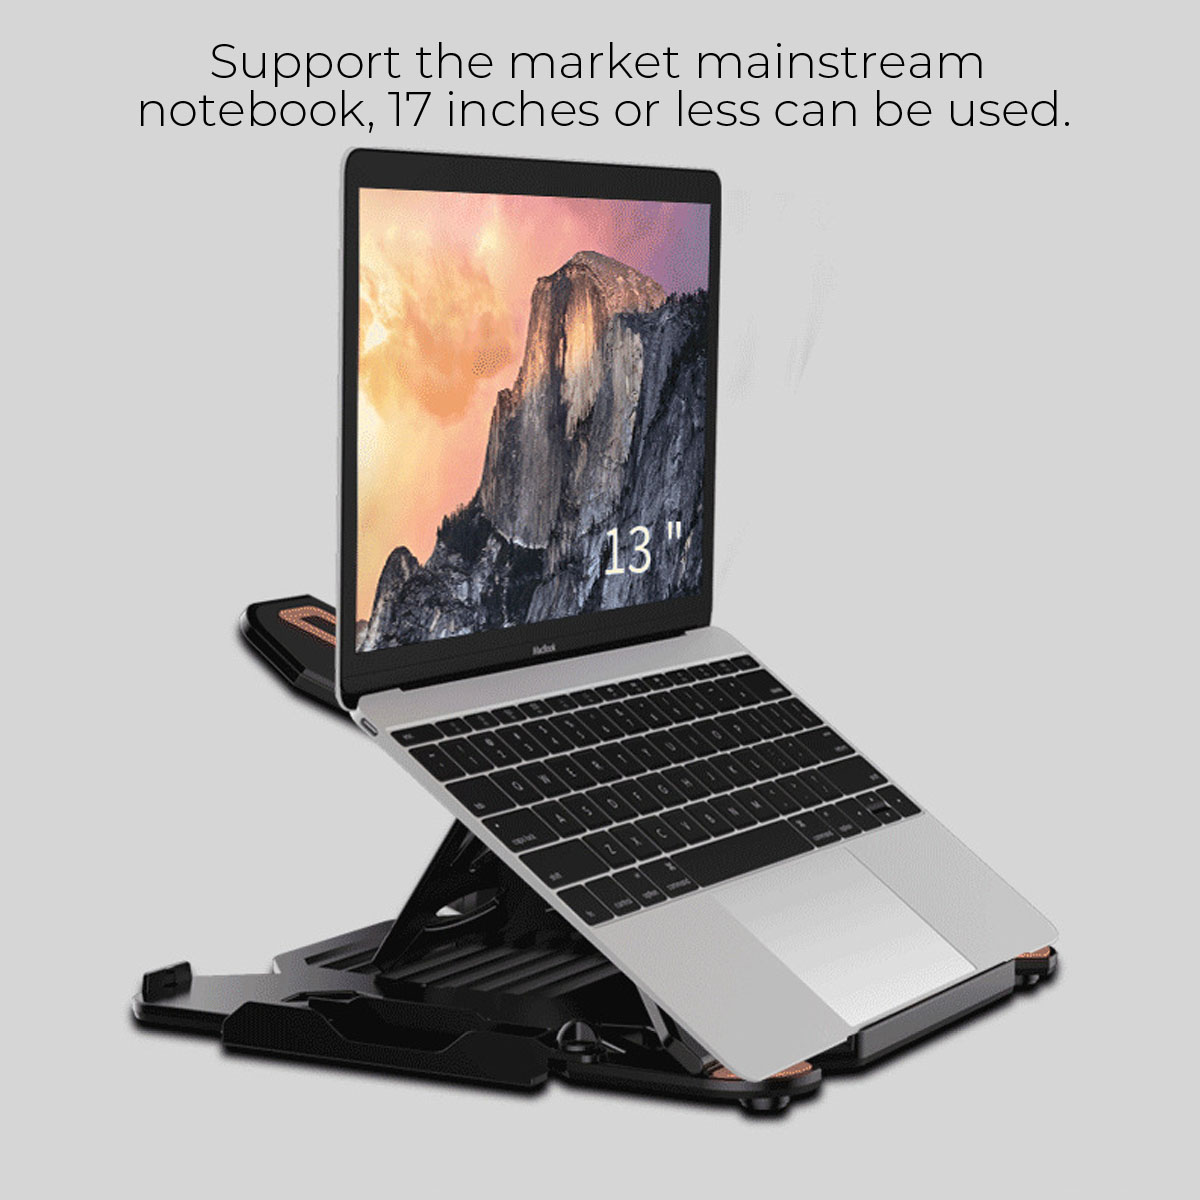 Portable-Apple-Macbook-Stand-Foldable-Adjustable-Laptop-Holder-Universal-Ergonomic-Non-slip-Tablets--1711954-7